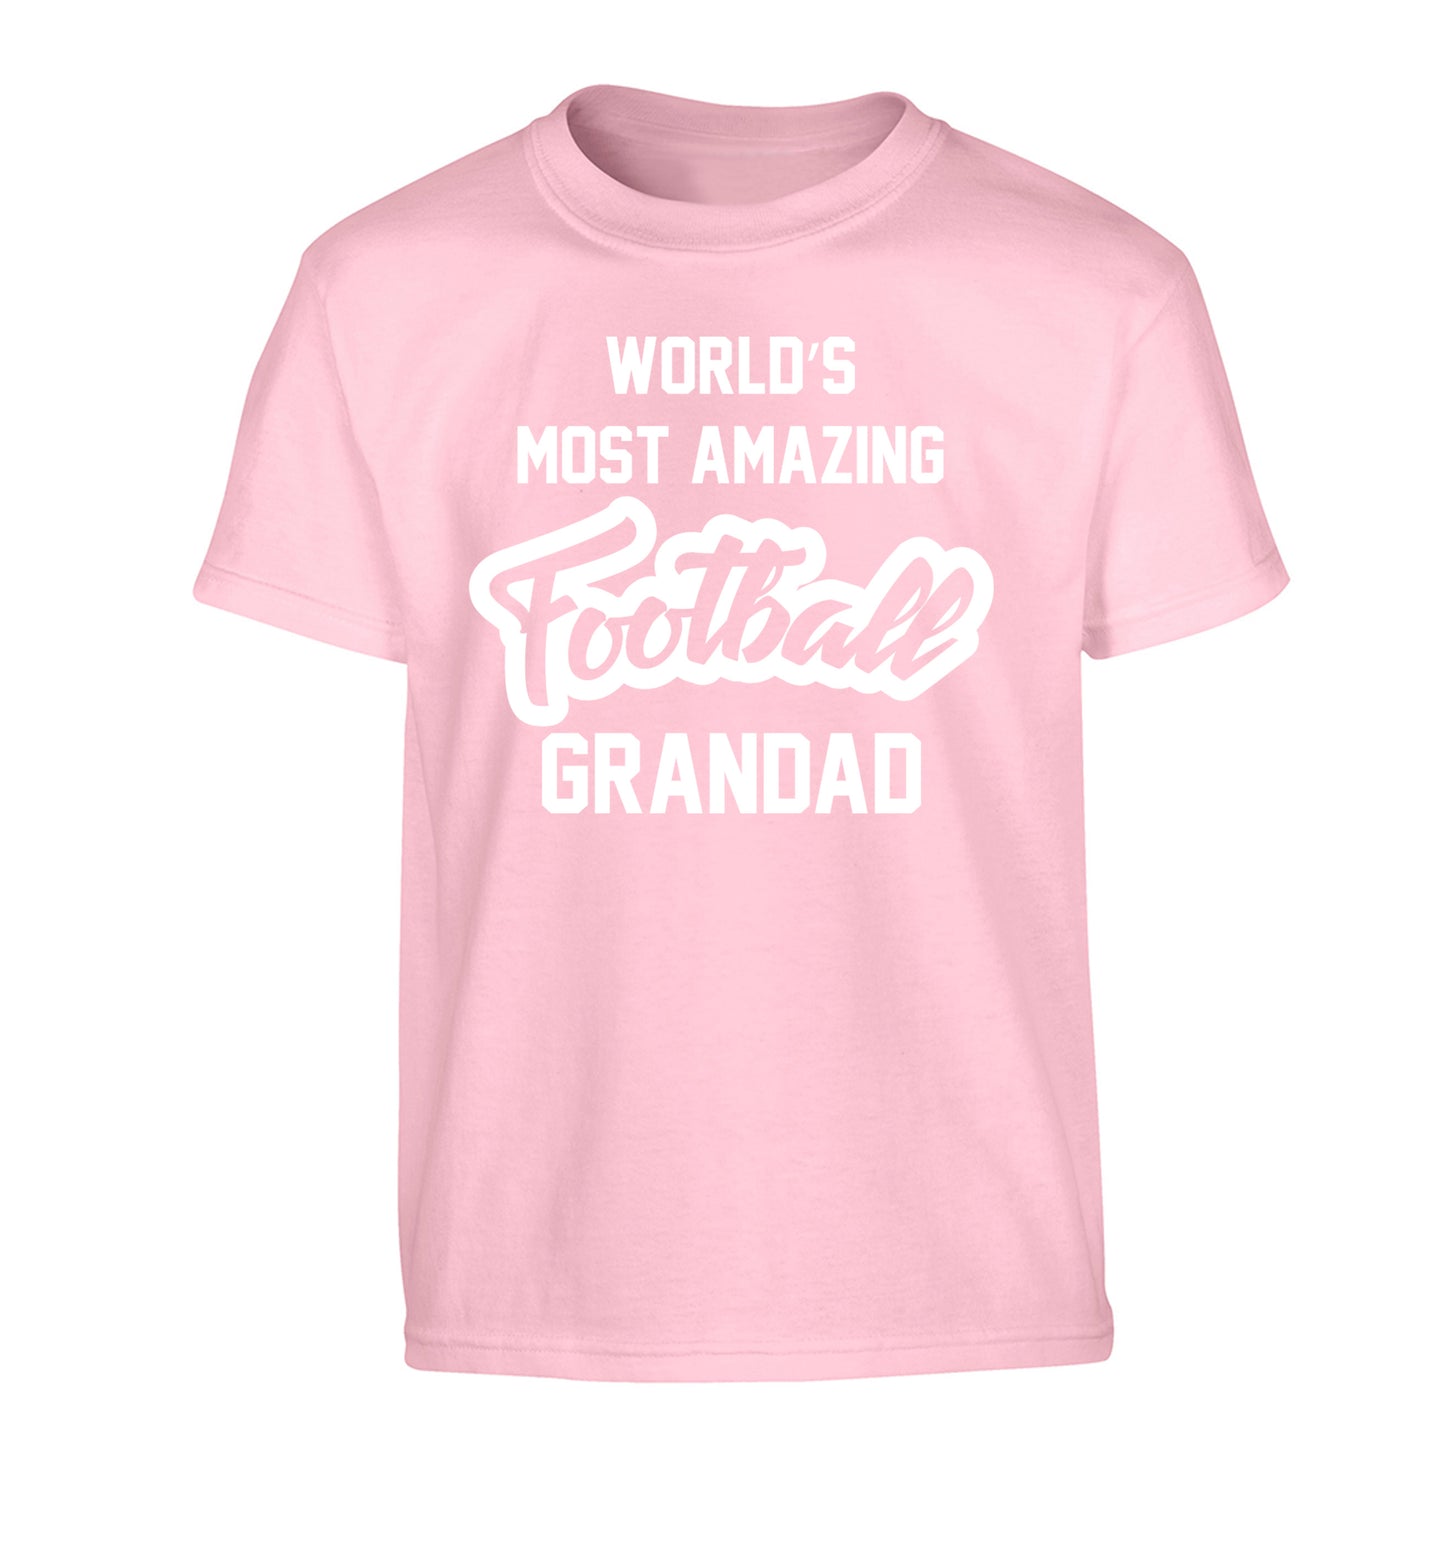 Worlds most amazing football grandad Children's light pink Tshirt 12-14 Years